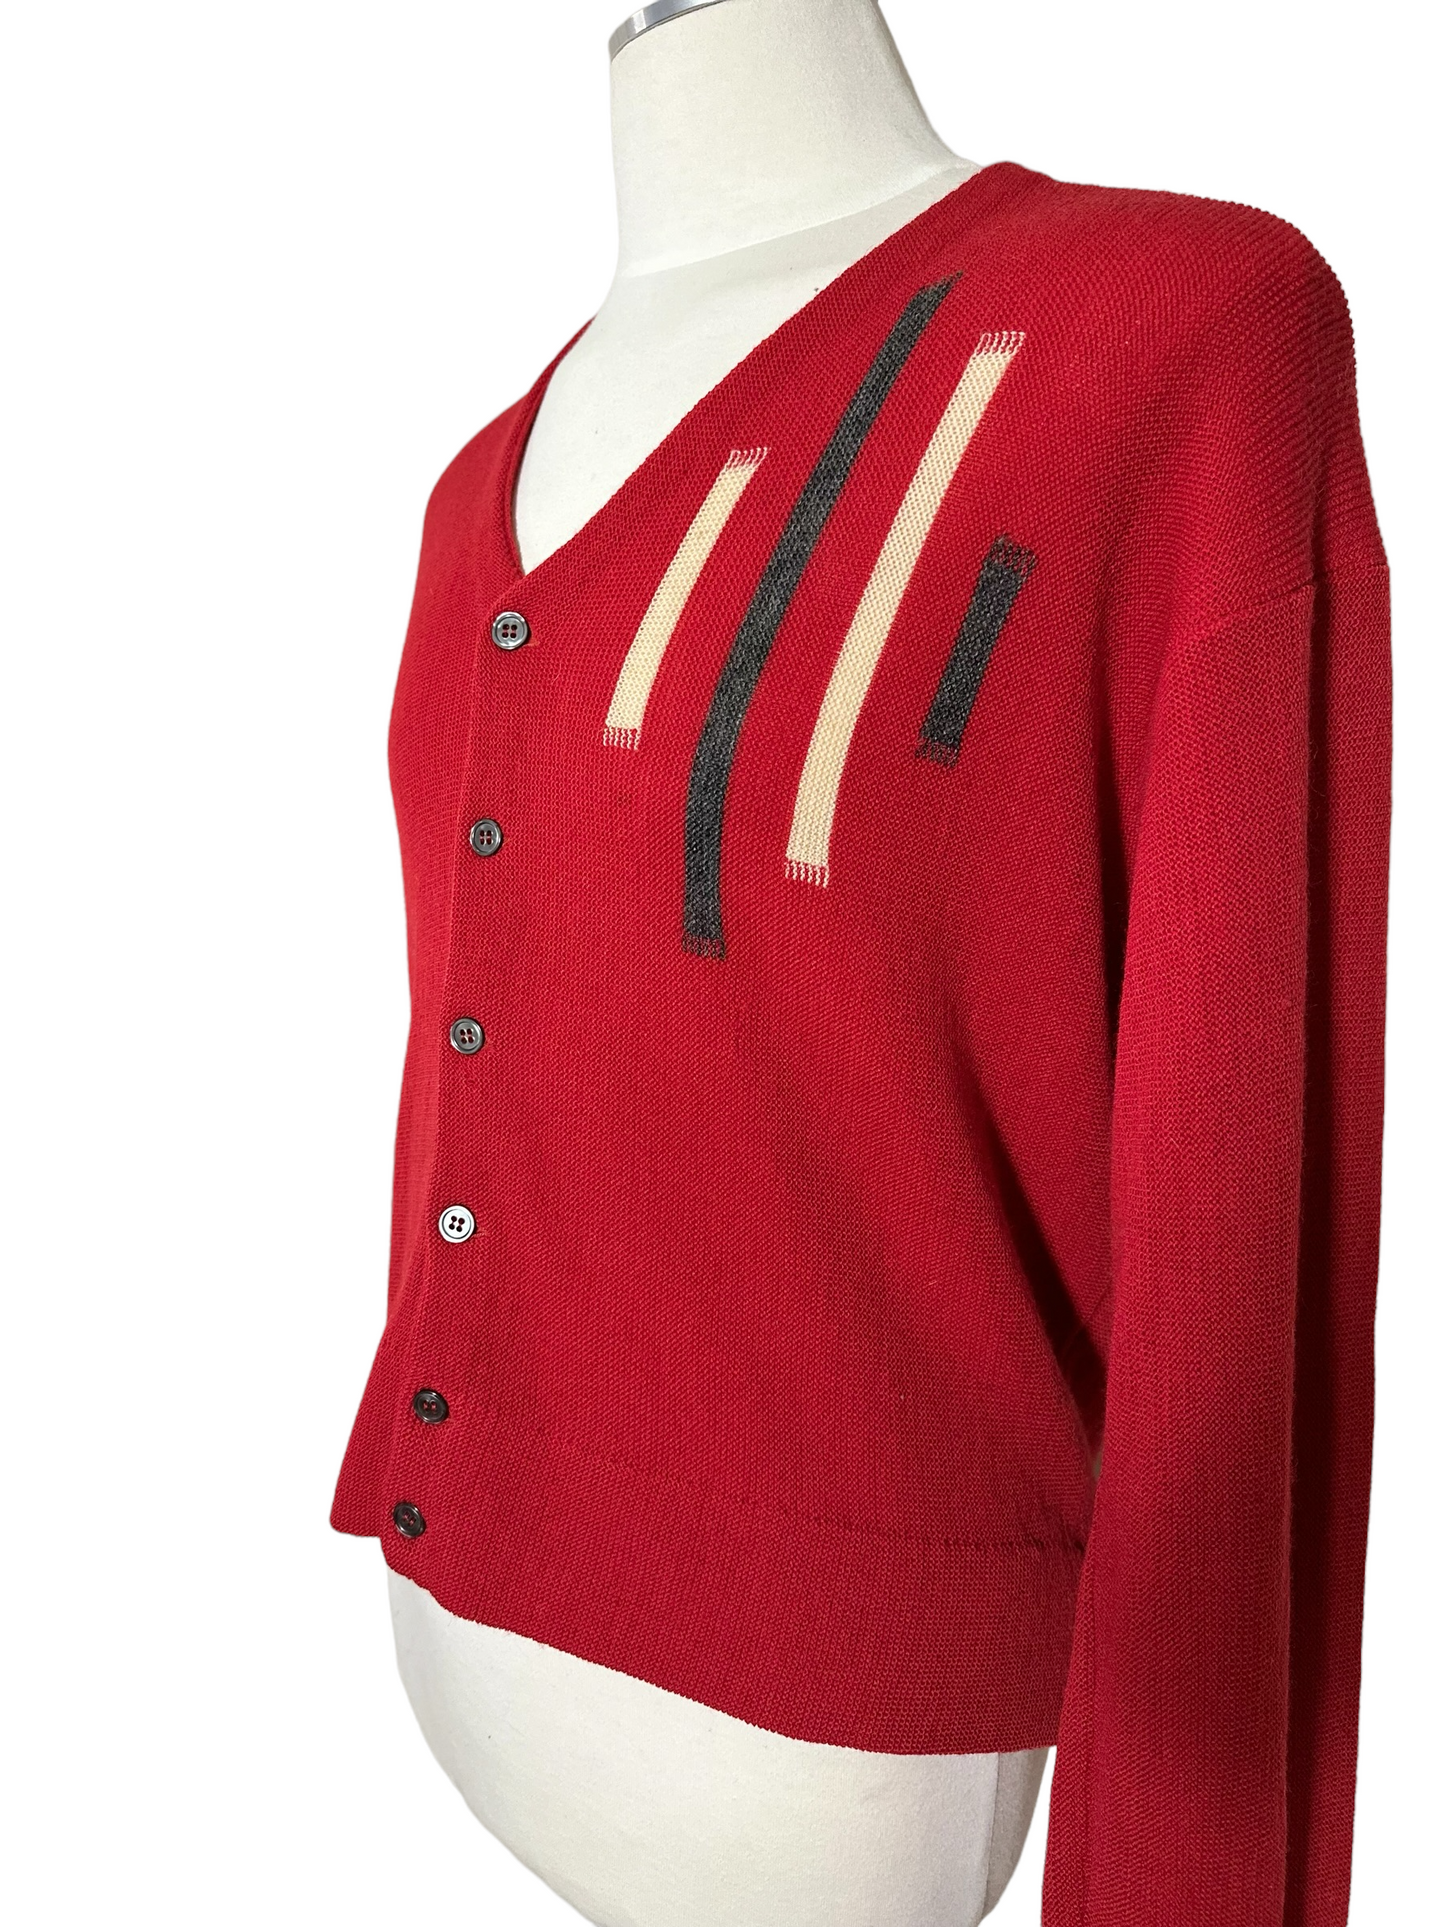 Detail View of Left Breast Panel on Vintage Hastings Red Wool Cardigan | Vintage Clothing Barn Owl Seattle